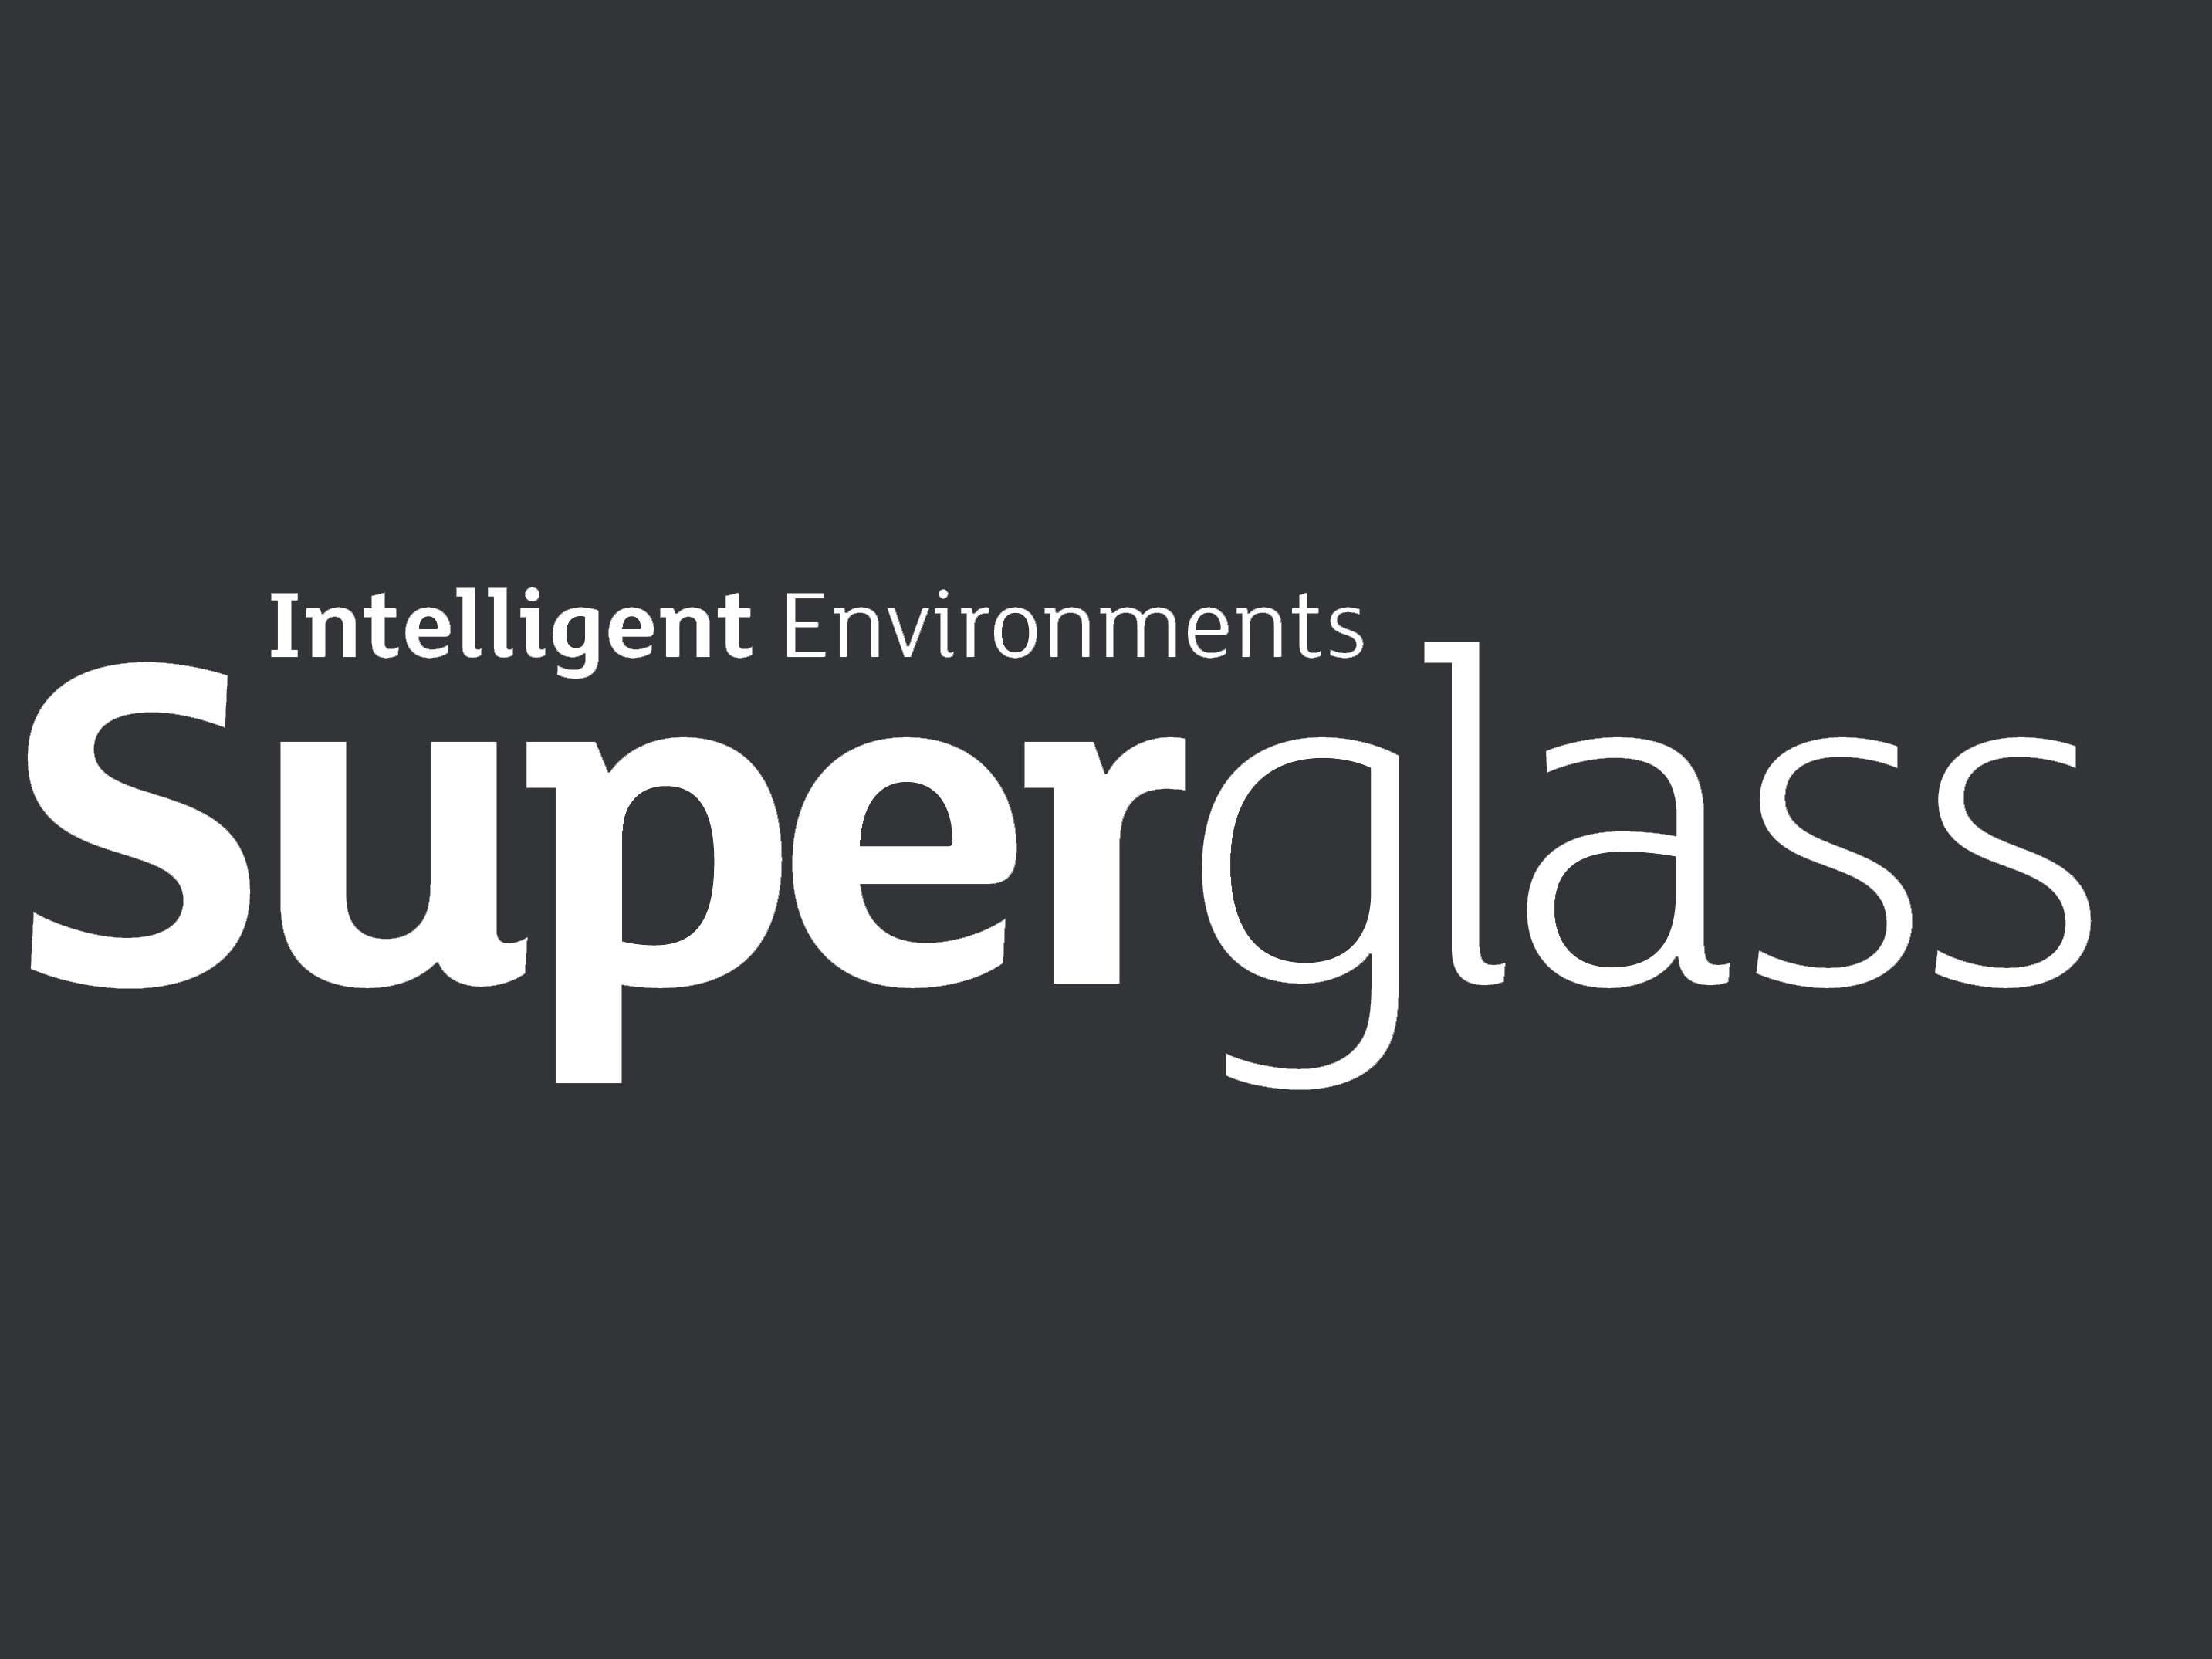 Superglass Insulation